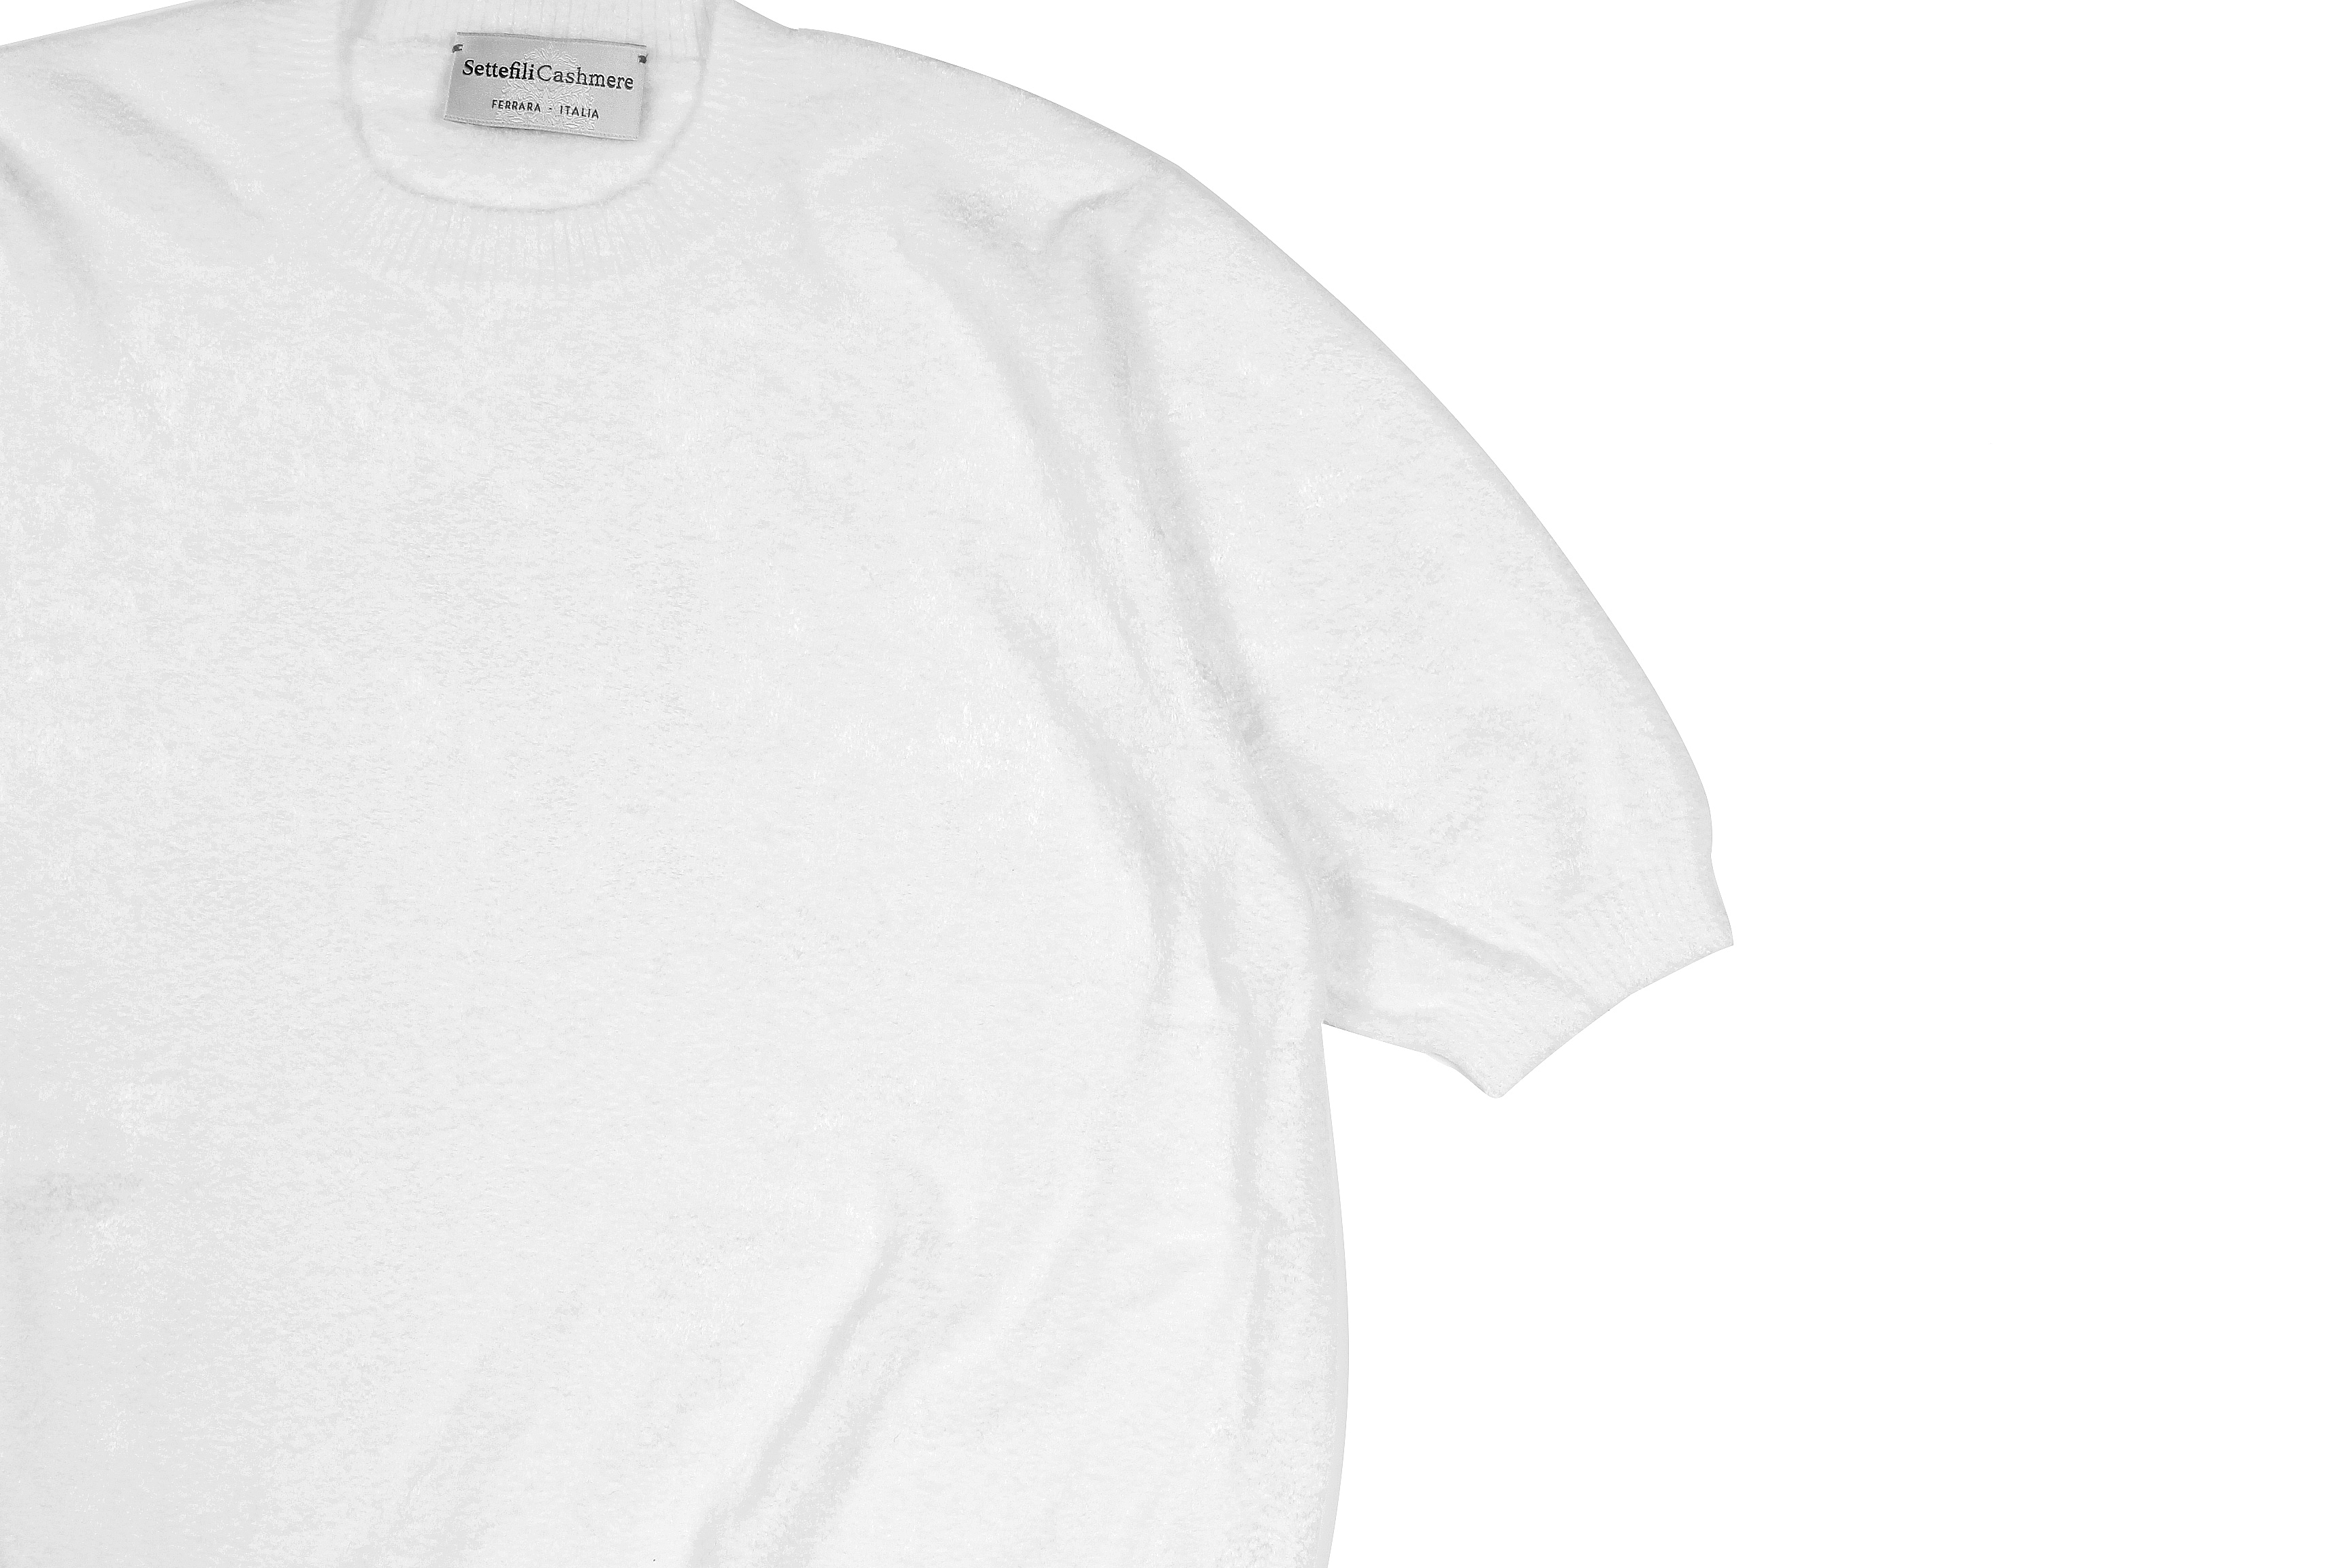 Settefili Cashmere (セッテフィーリ カシミア) Pile Knit T-shirt パイルニットTシャツ WHITE (ホワイト・GD01) made in italy (イタリア製) 2020 春夏新作 愛知 名古屋 altoediritto アルトエデリット